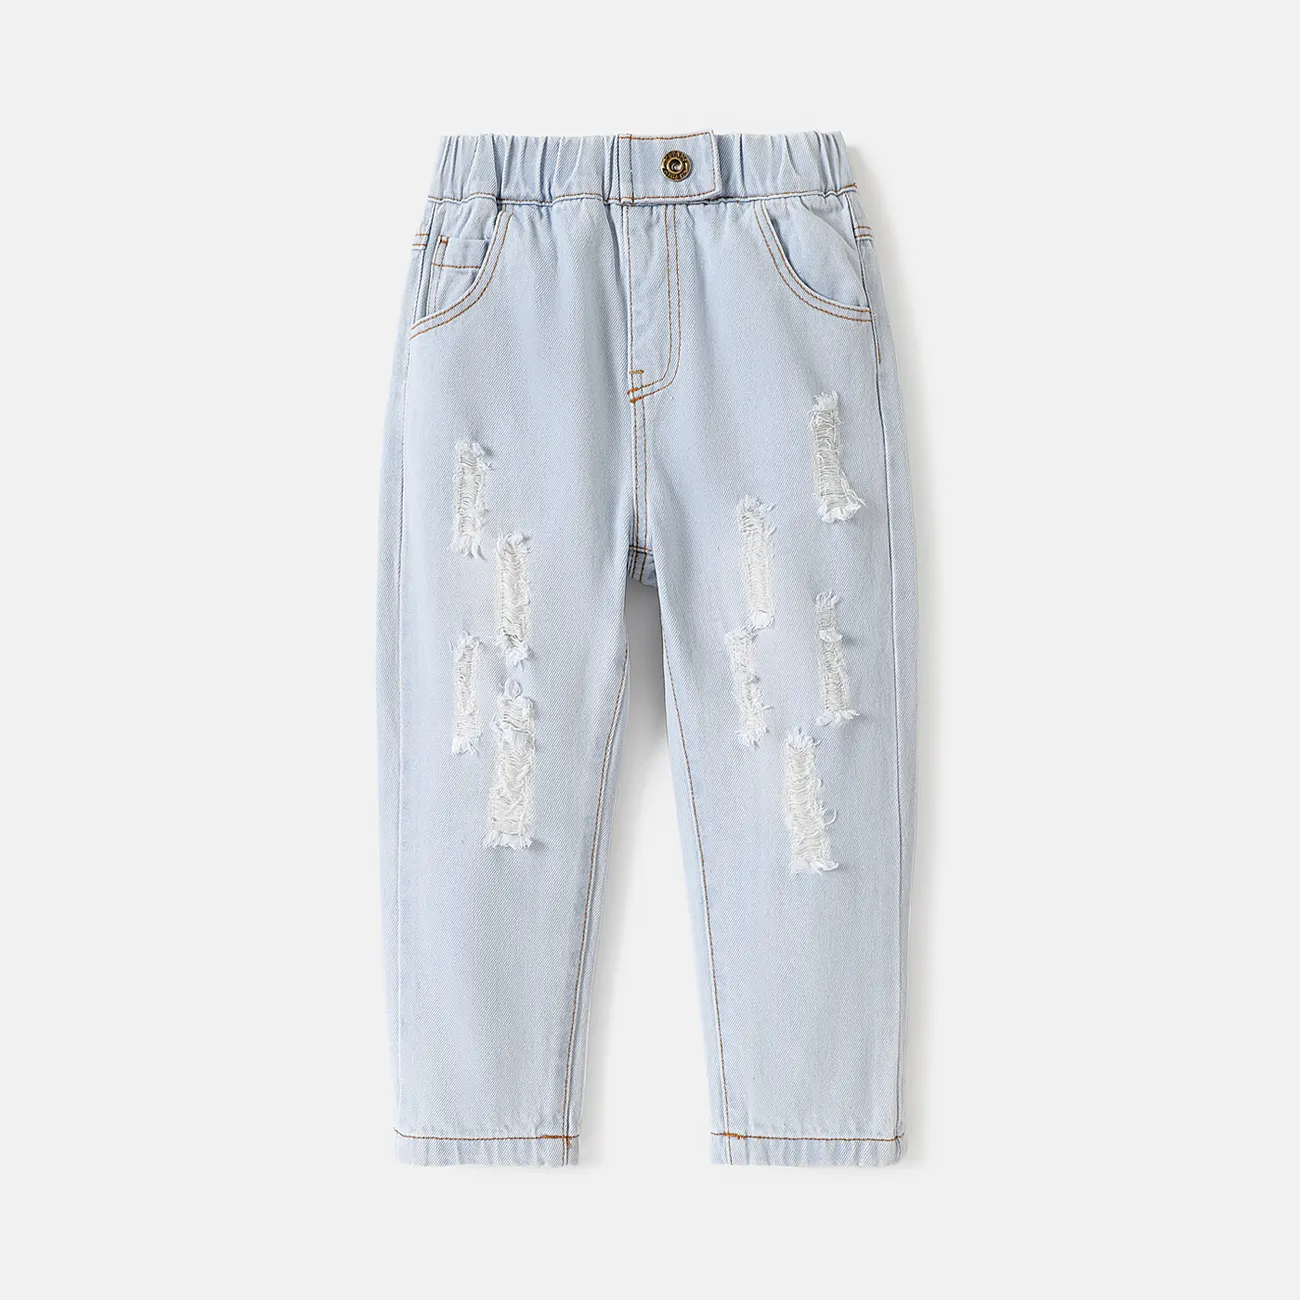 Toddler Girl/Boy Elasticized Cotton Ripped Denim Jeans  big image 1